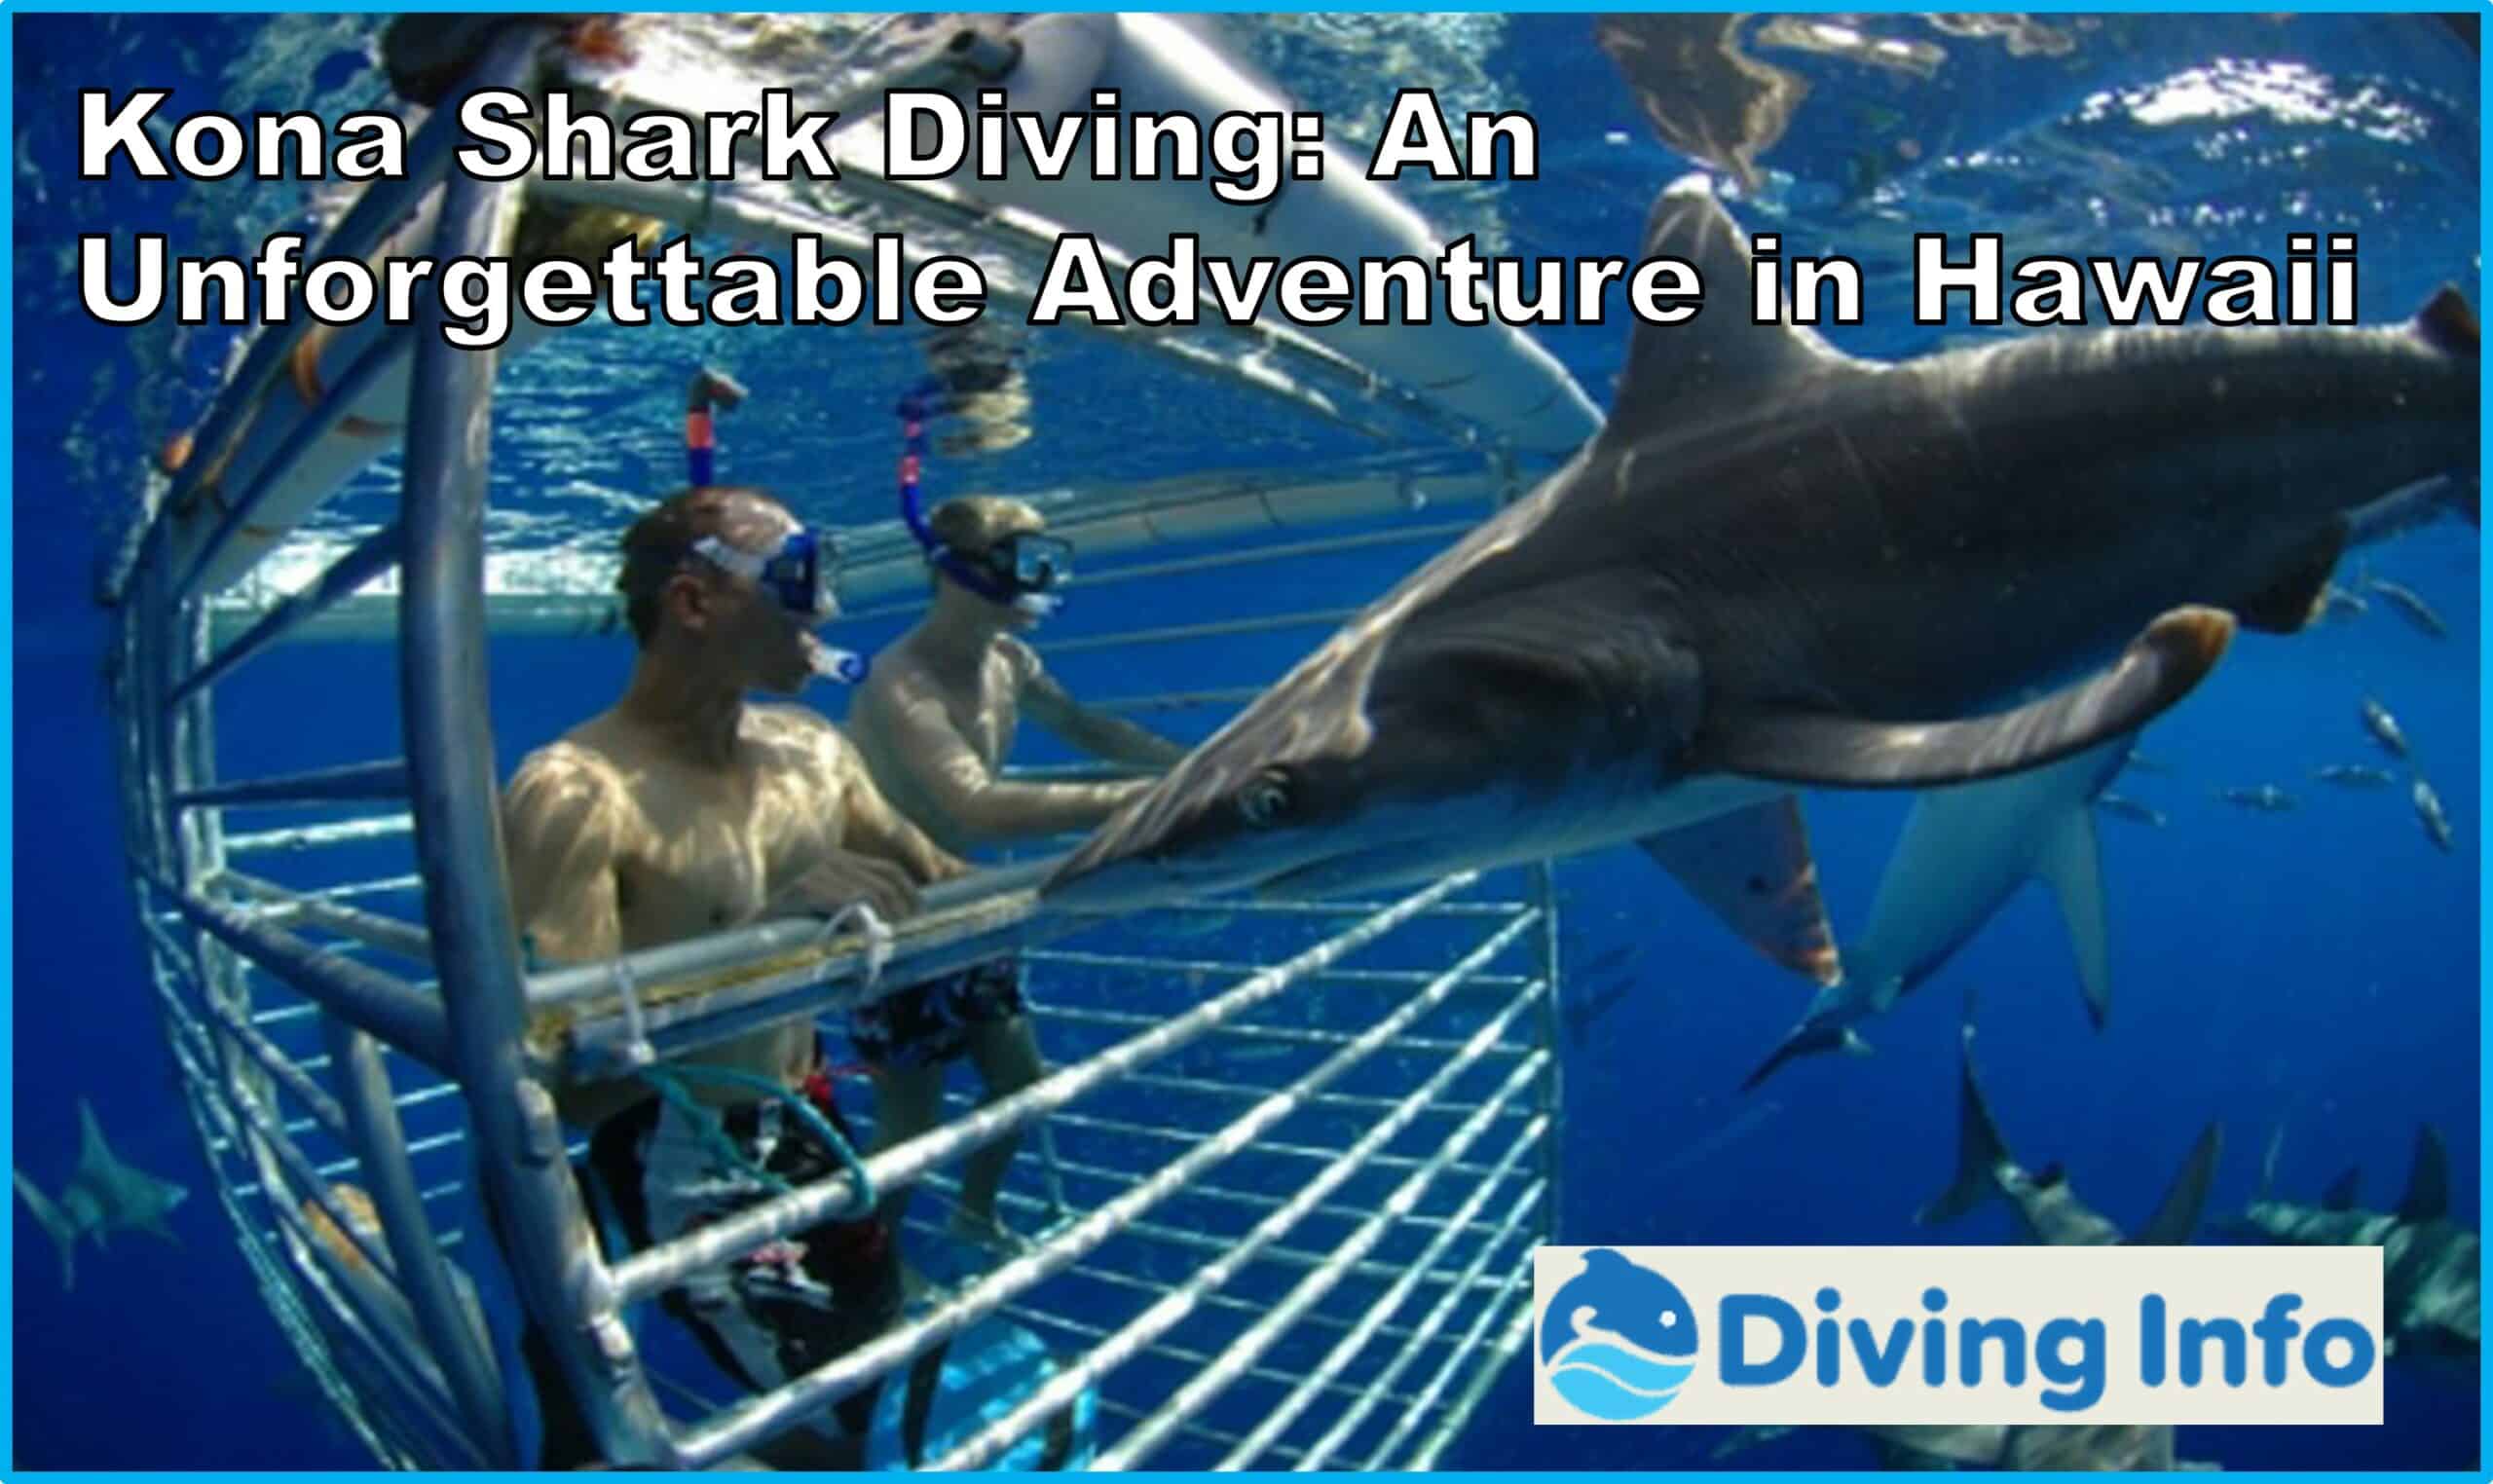 Kona Shark Diving: An Unforgettable Adventure in Hawaii